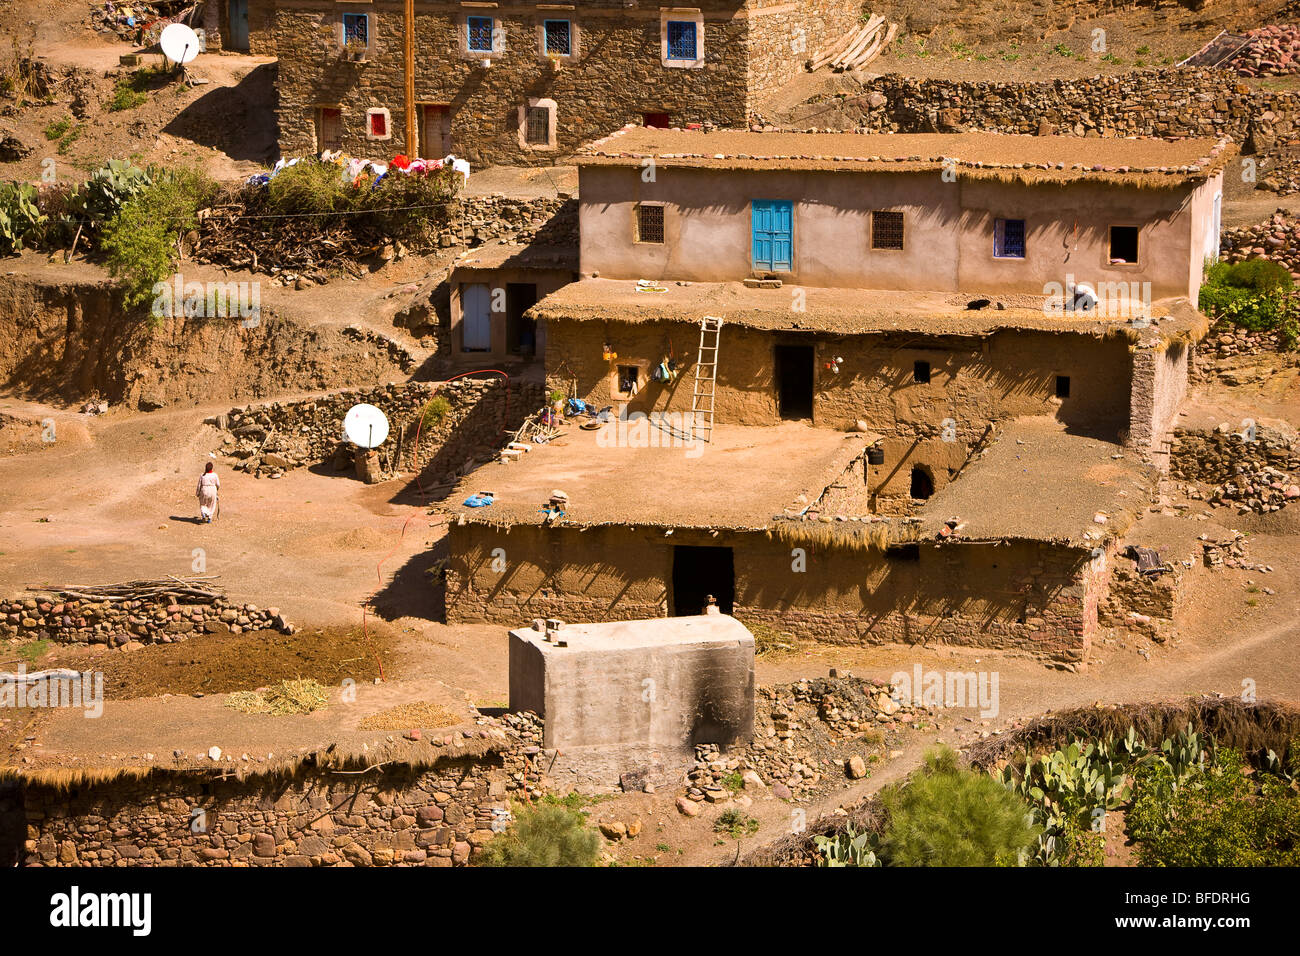 TAGNI, MOROCCO - Berber village in the Atlas Mountains. Stock Photo